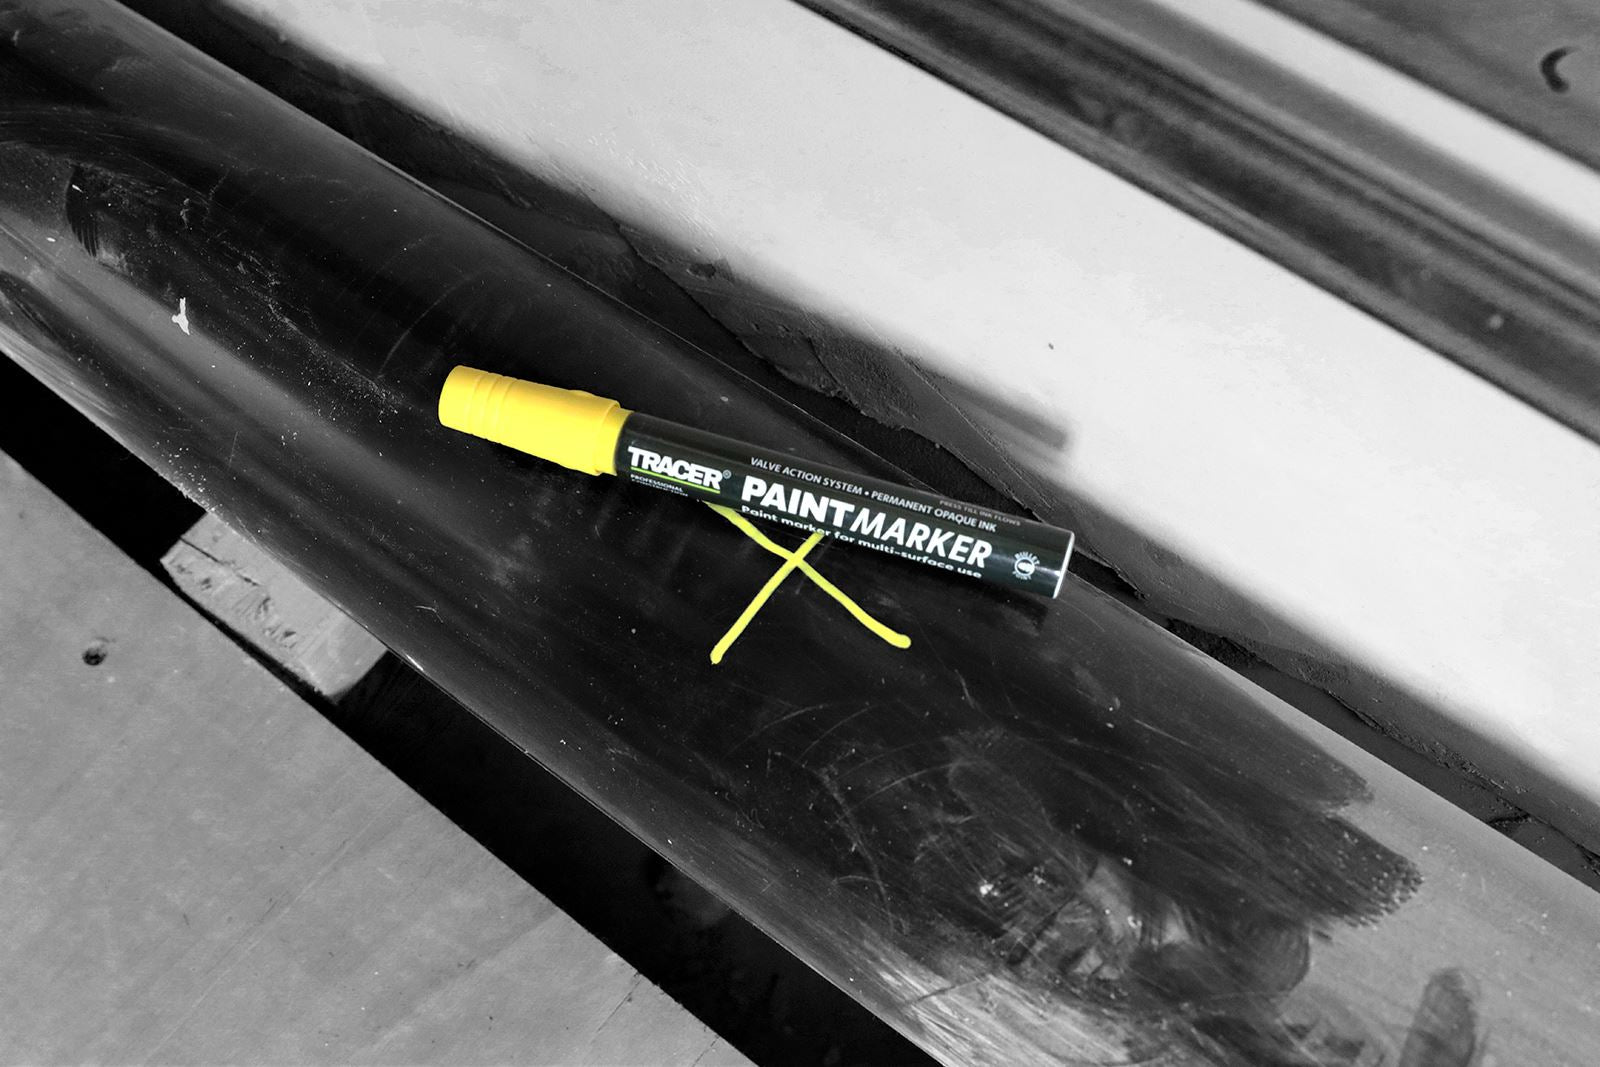 TRACER APTM1 Paint Marker, Yellow 